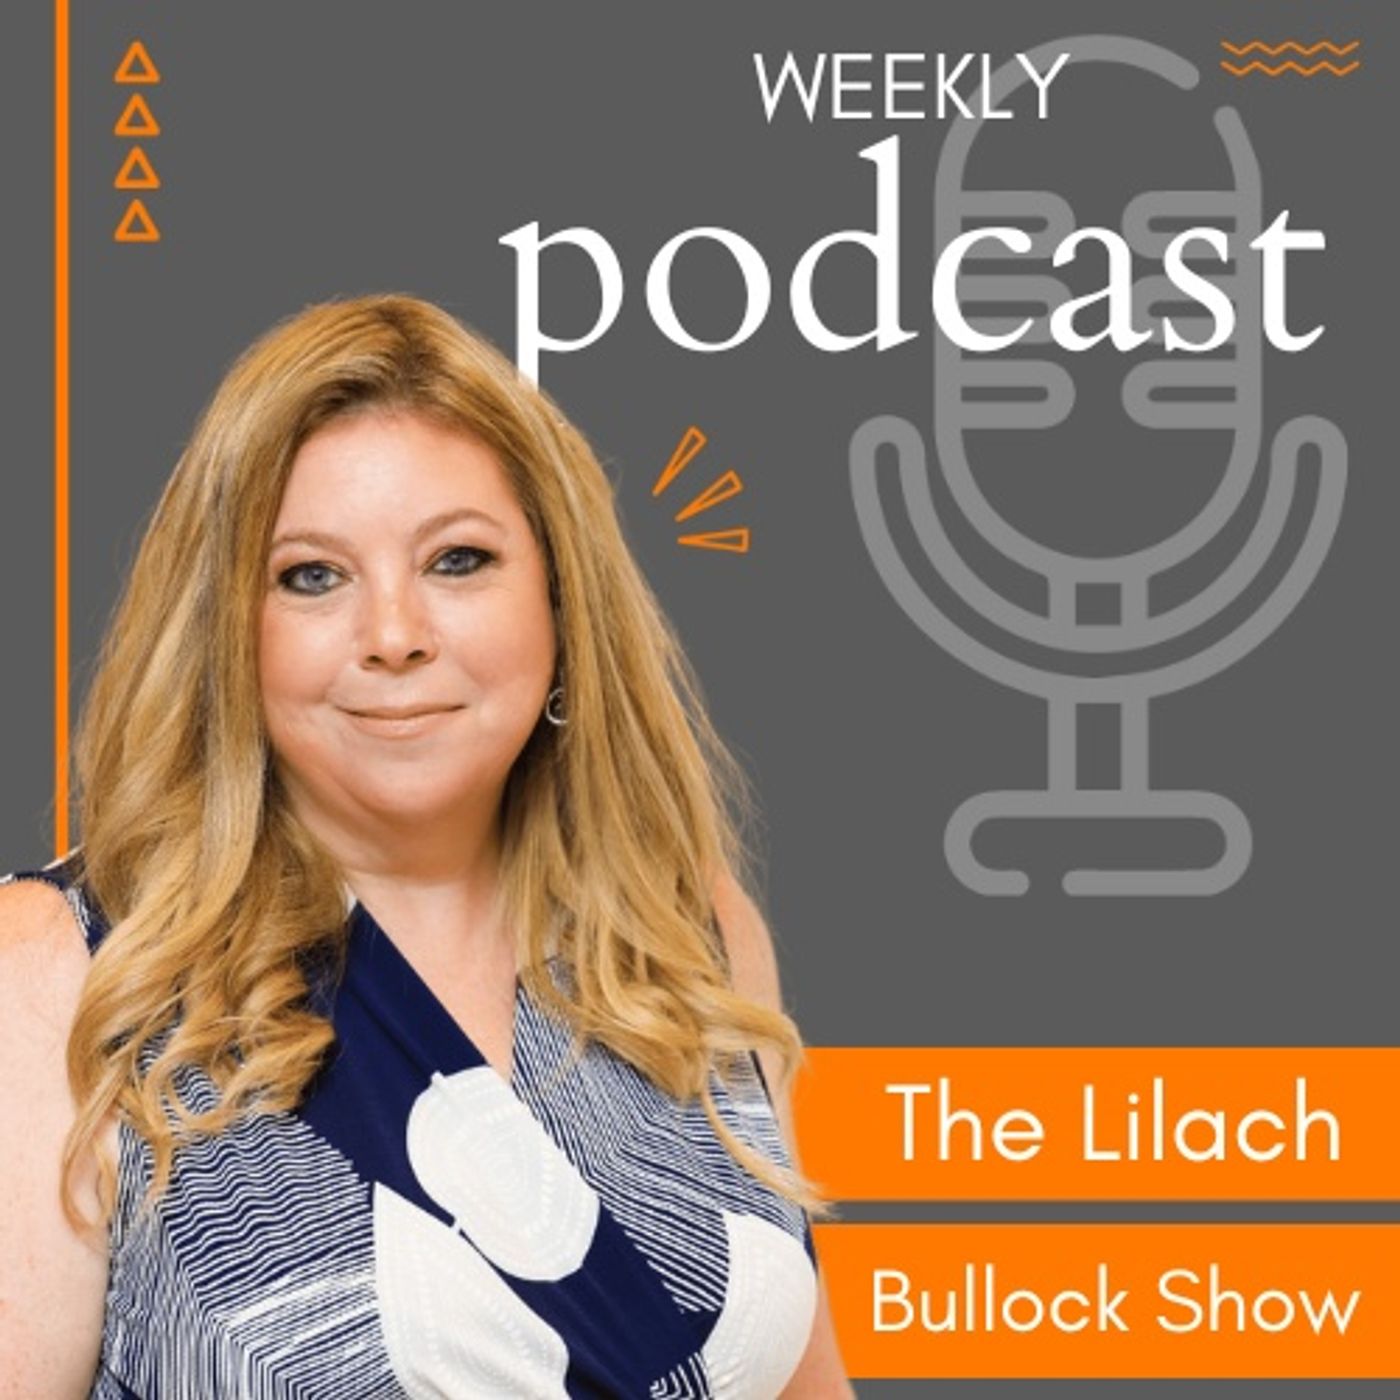 The Lilach Bullock Show